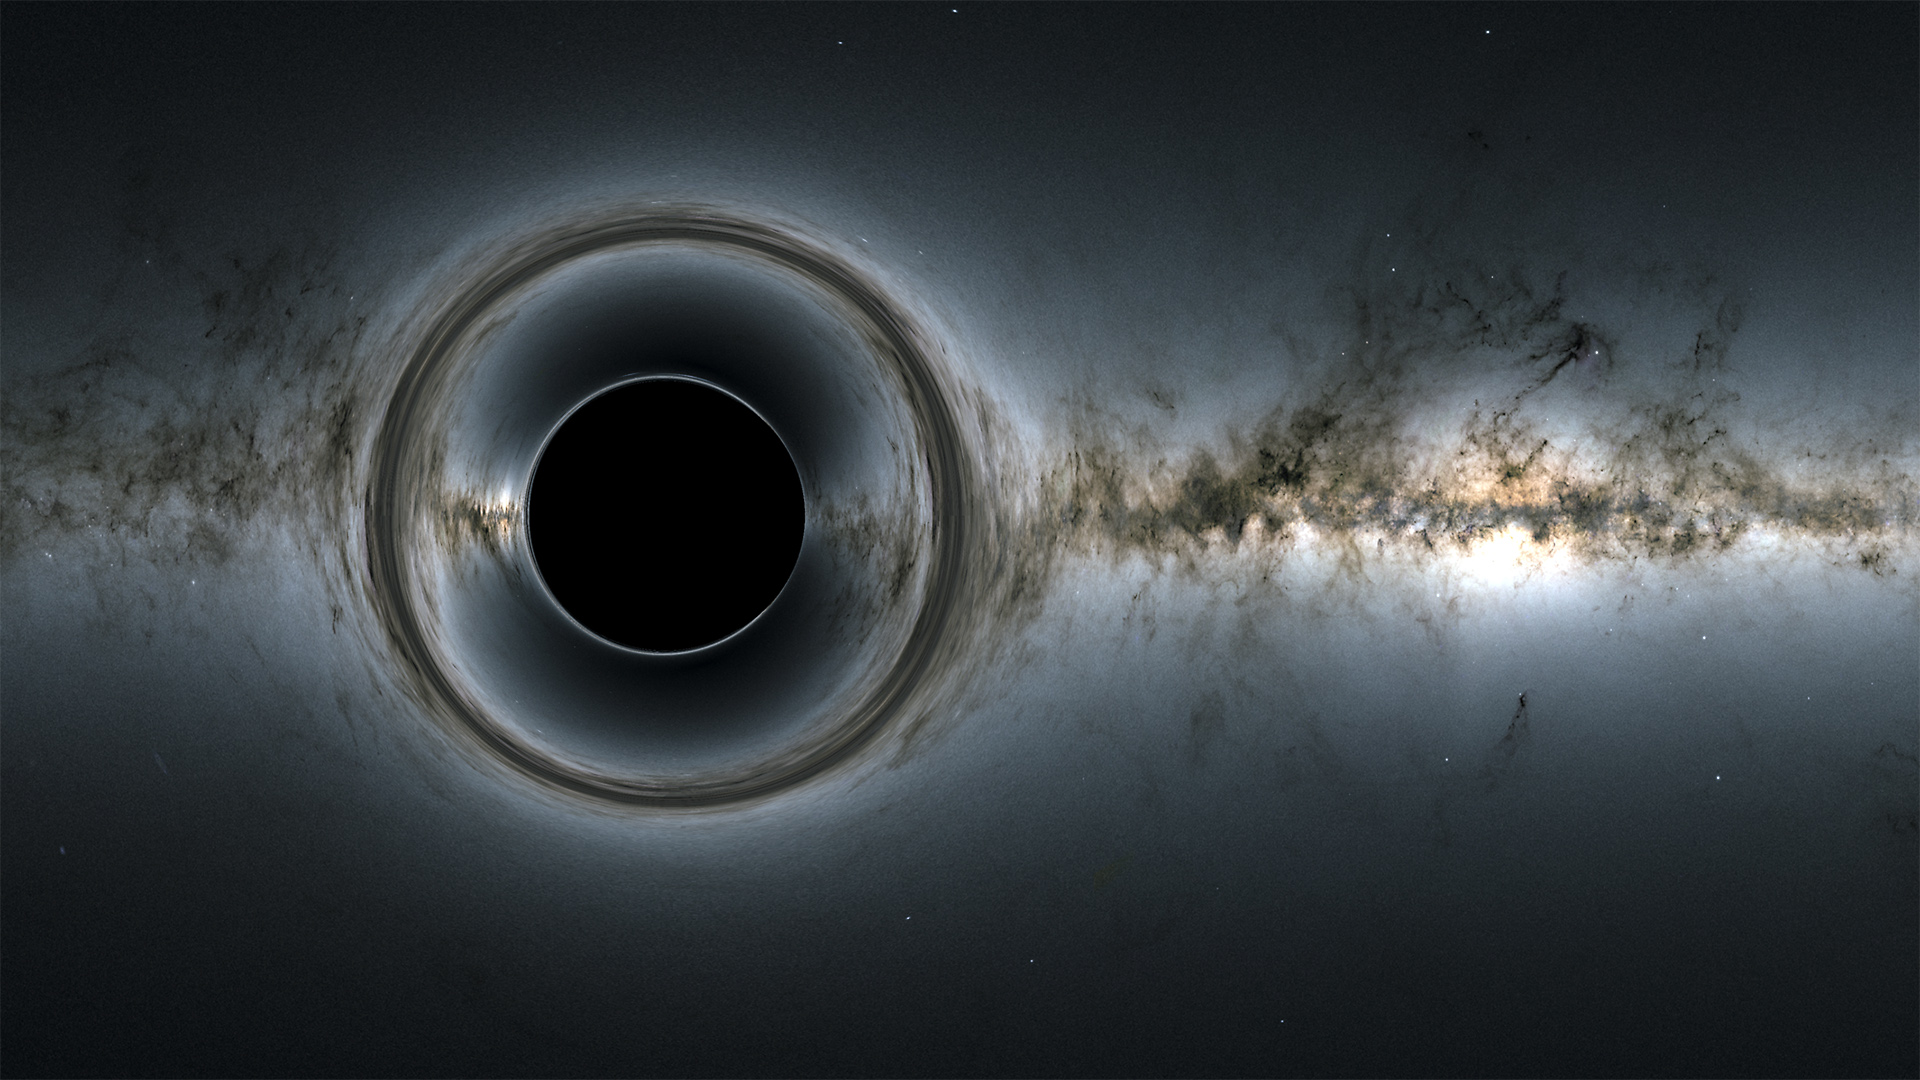 Swirling Vortex of Bathtub Water Mechanism of Black Hole Physics revel